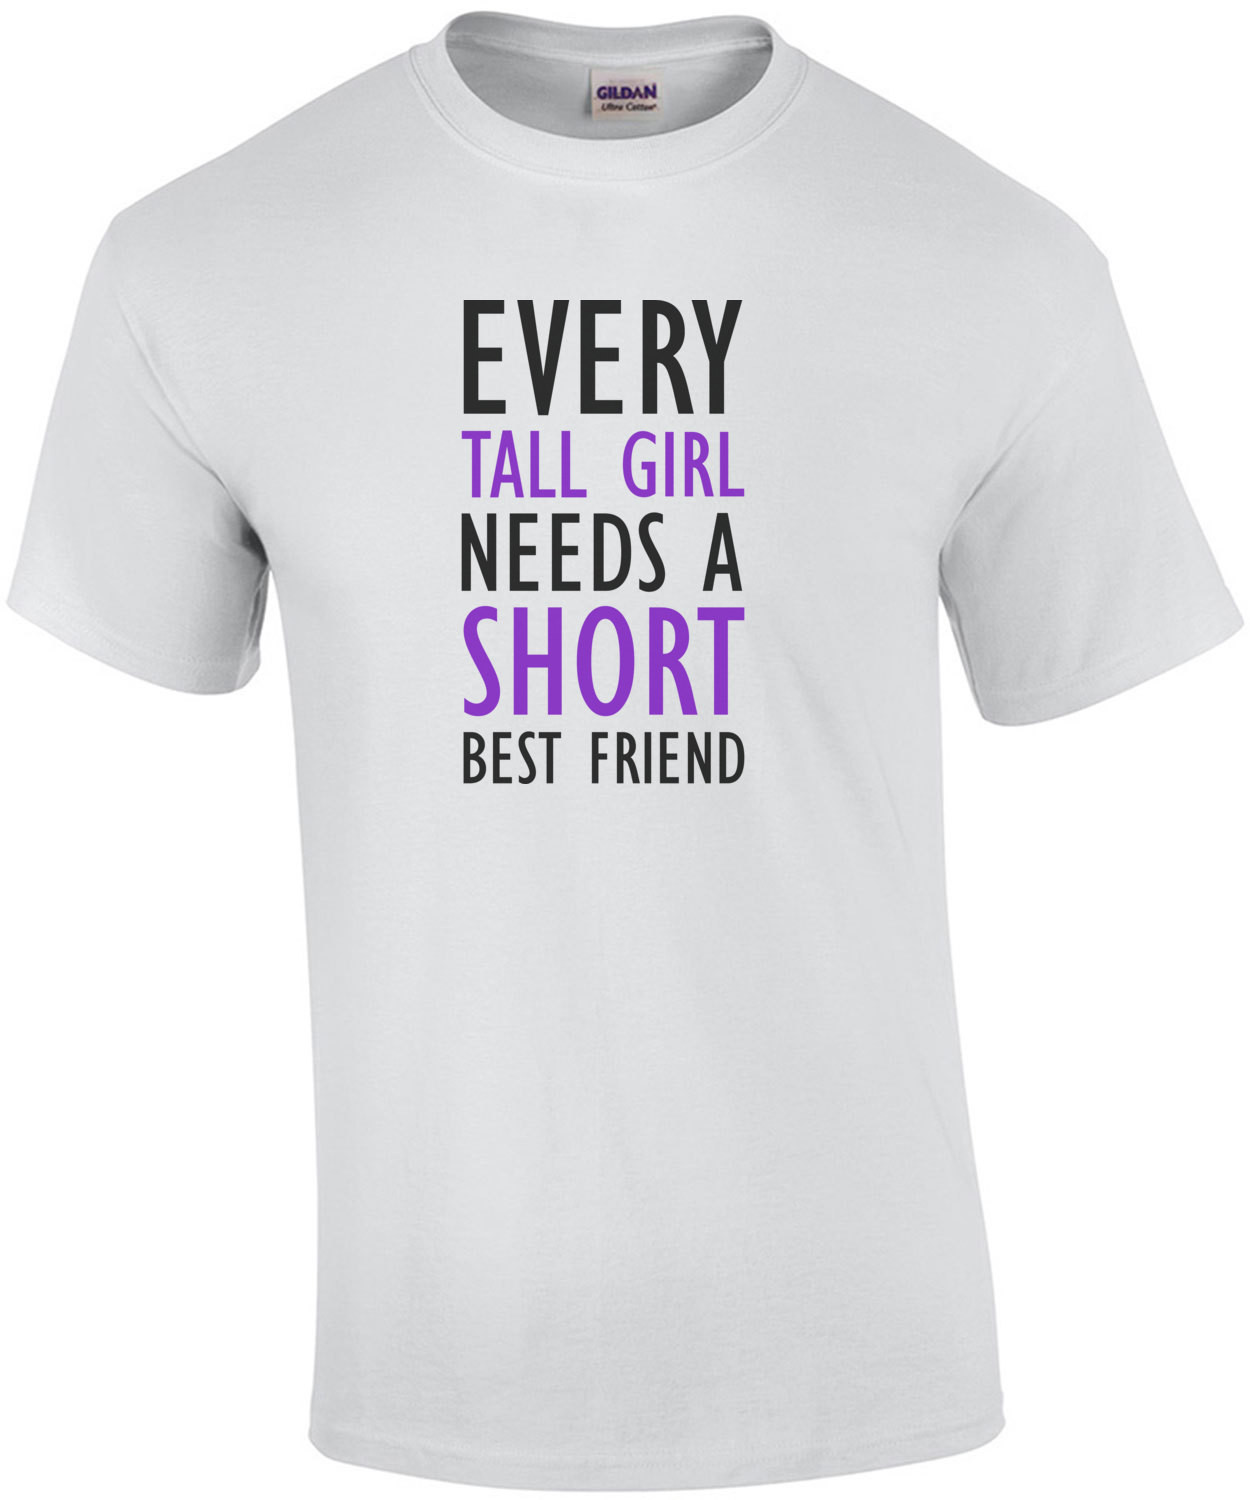 Every tall girl needs a shirt best friend - funny ladies t-shirt